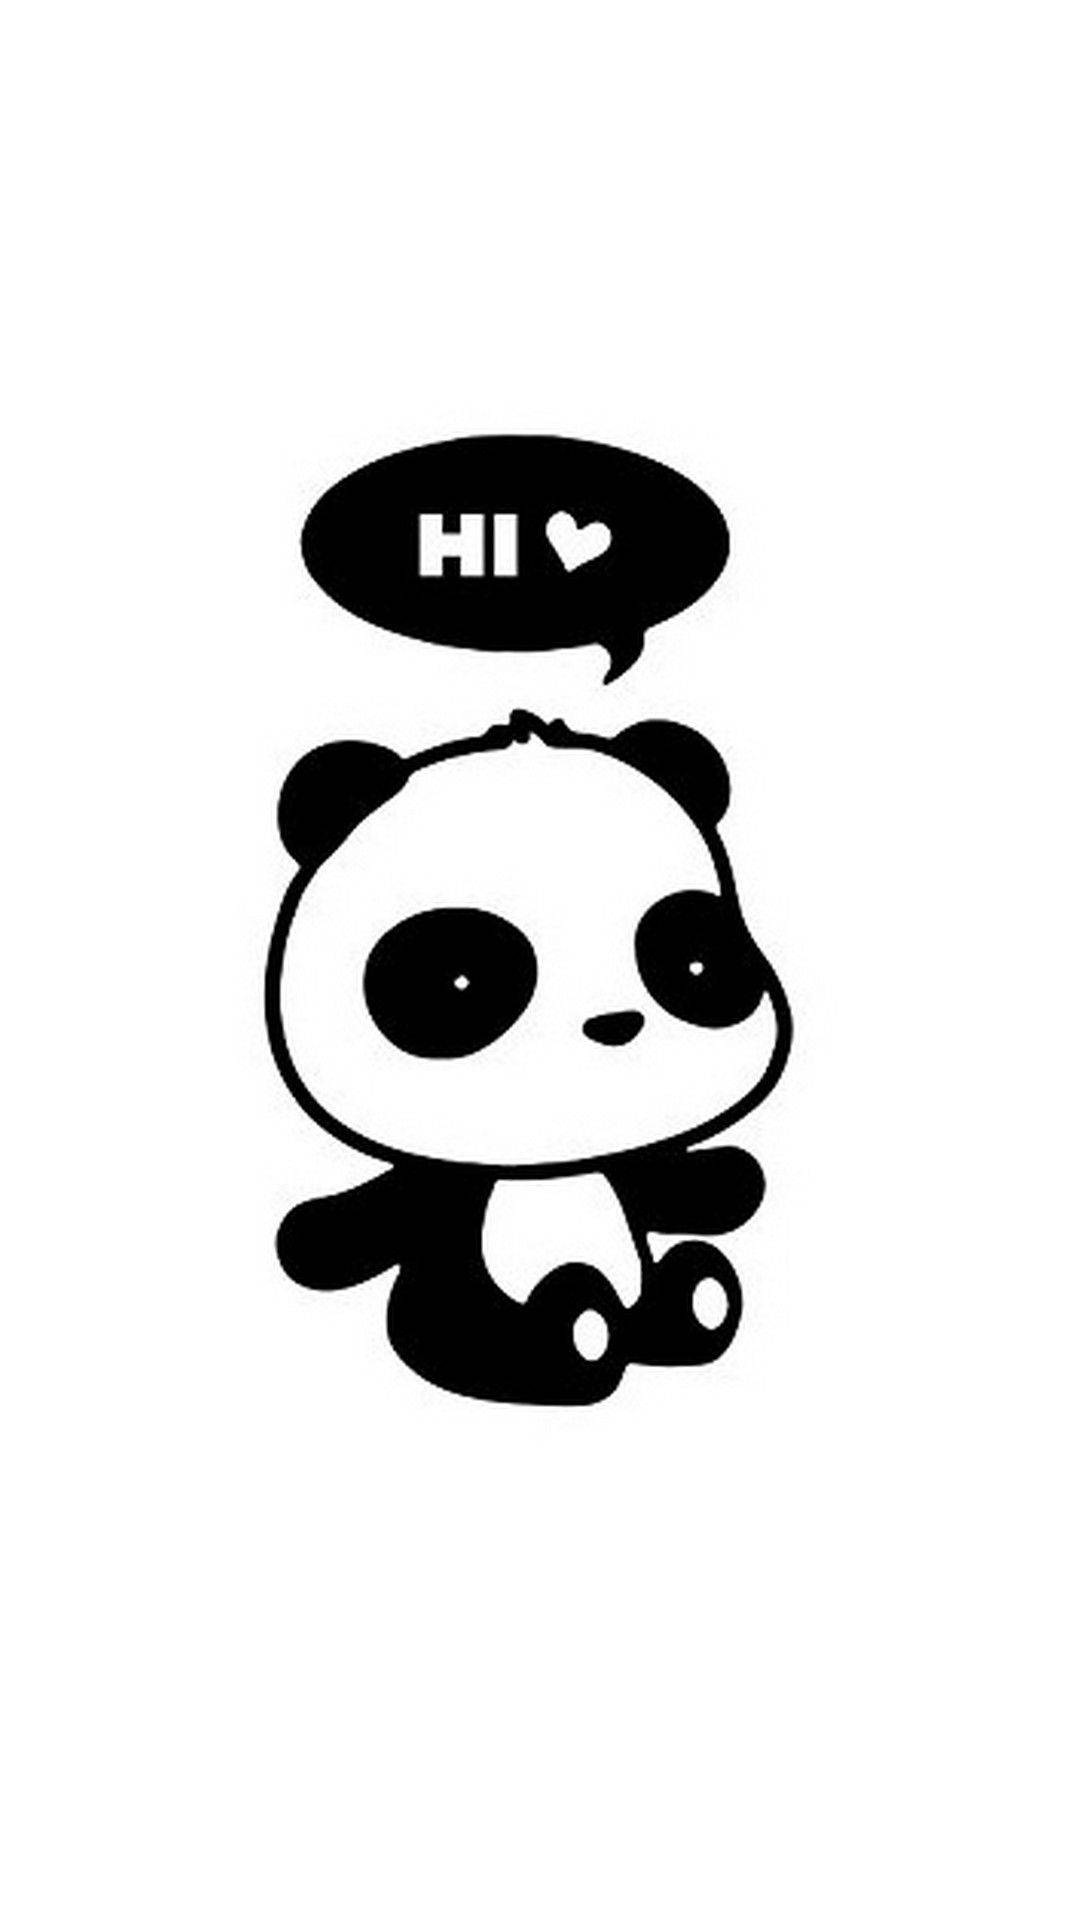 Cute Panda Saying Hi Background